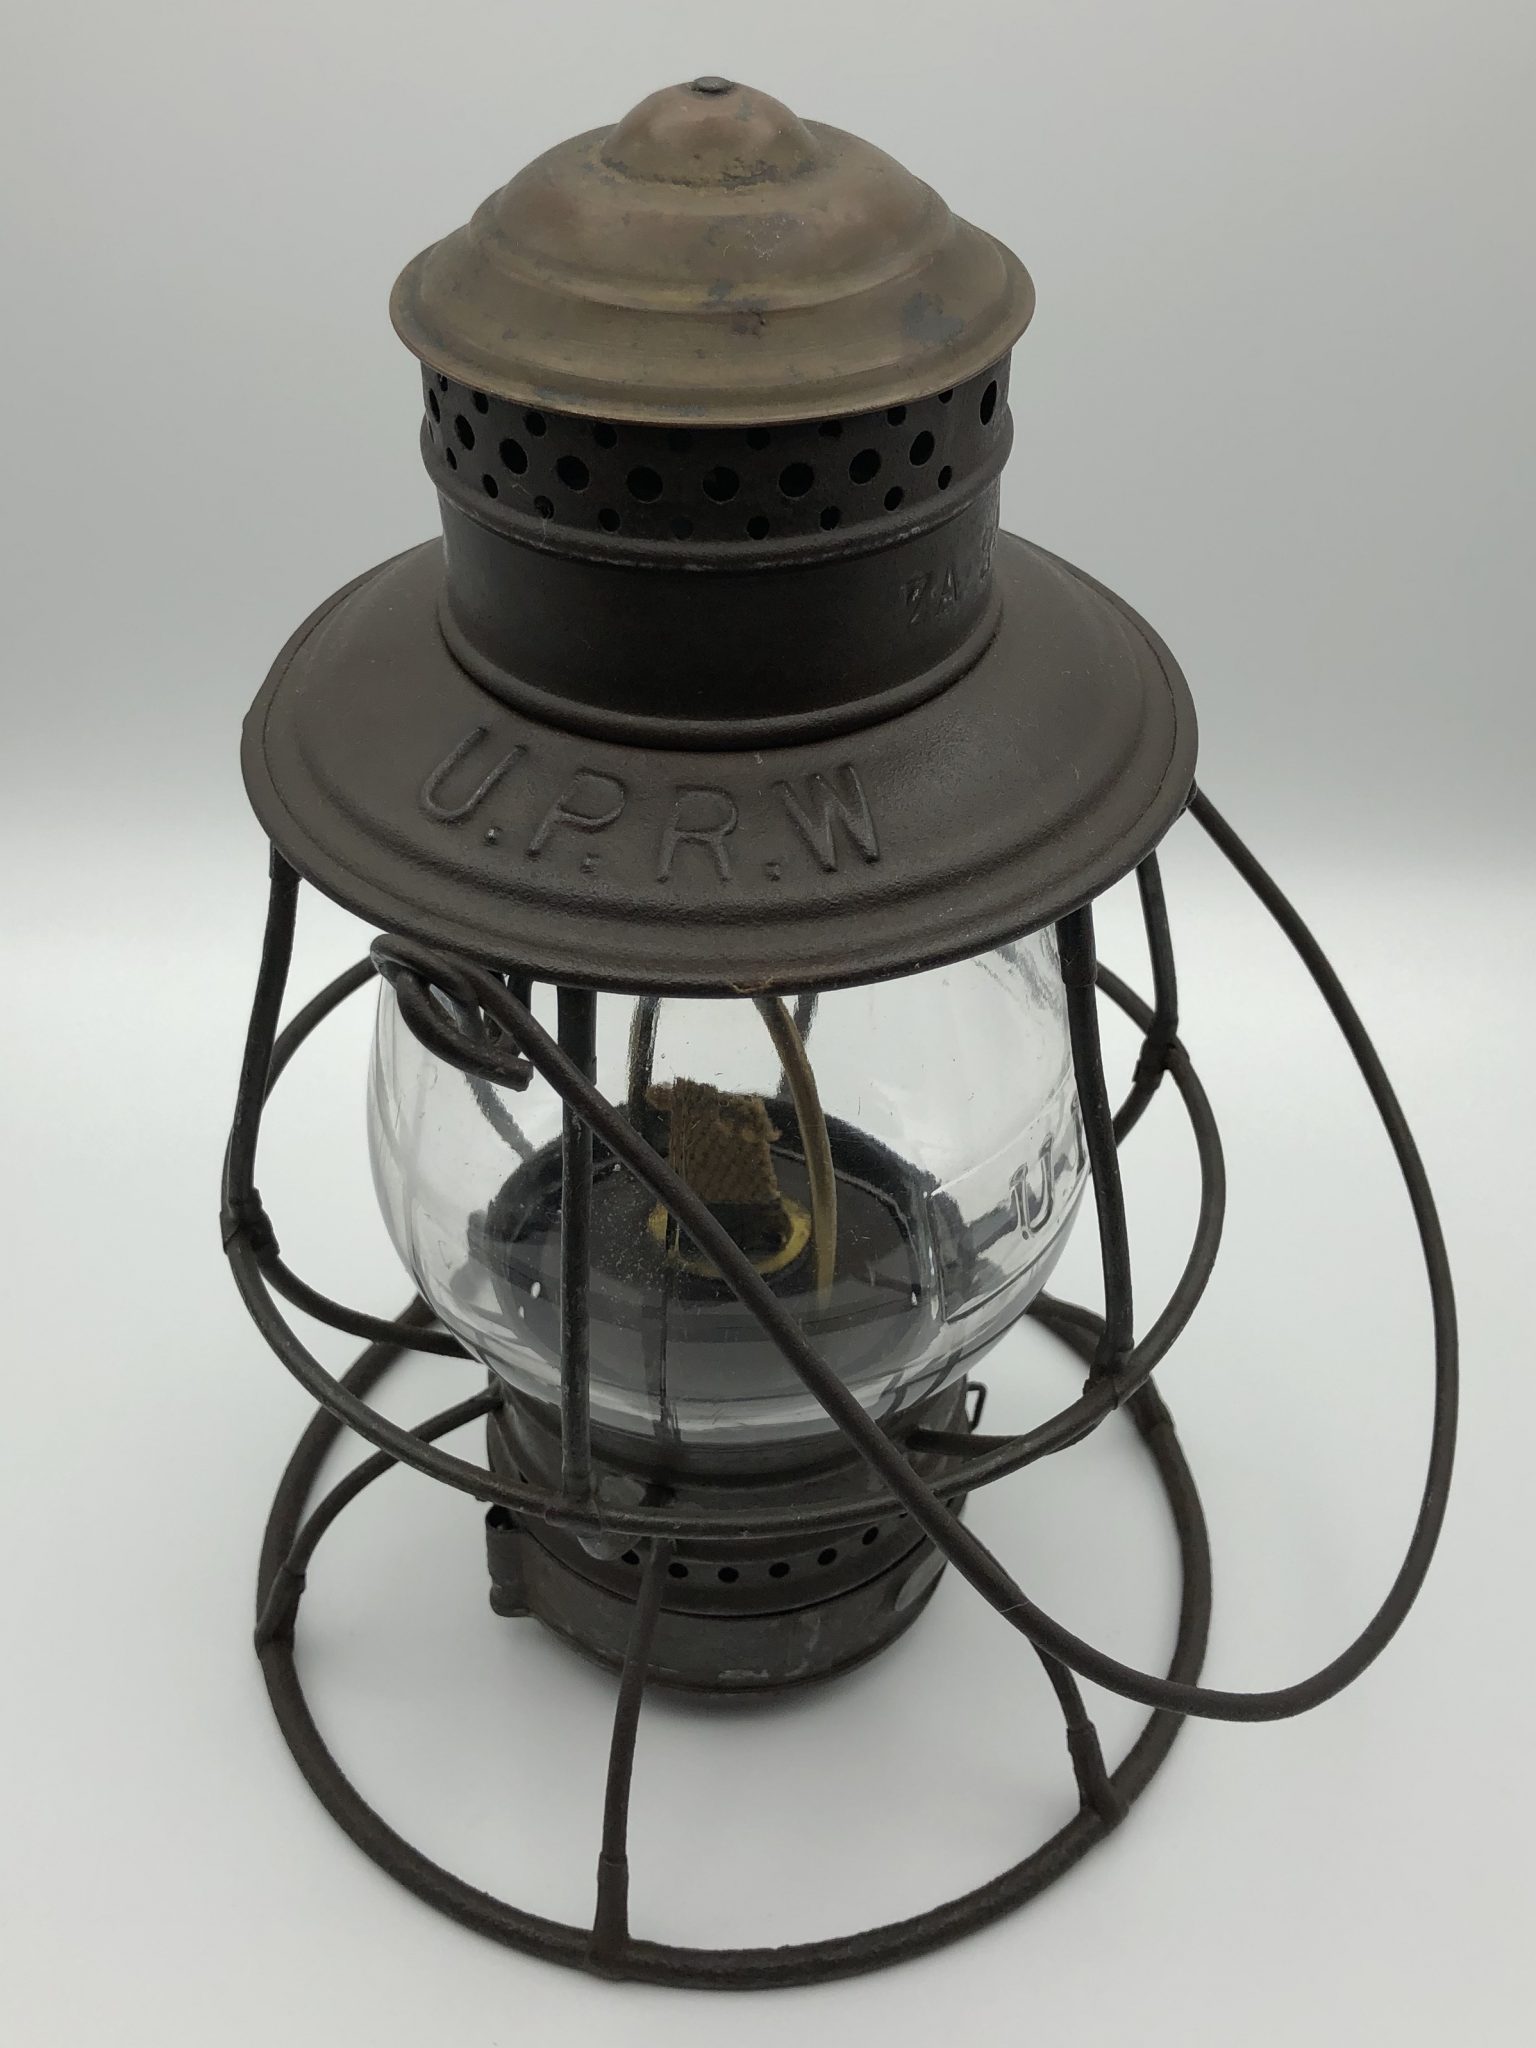 UPRW Brasstop Railroad Lantern